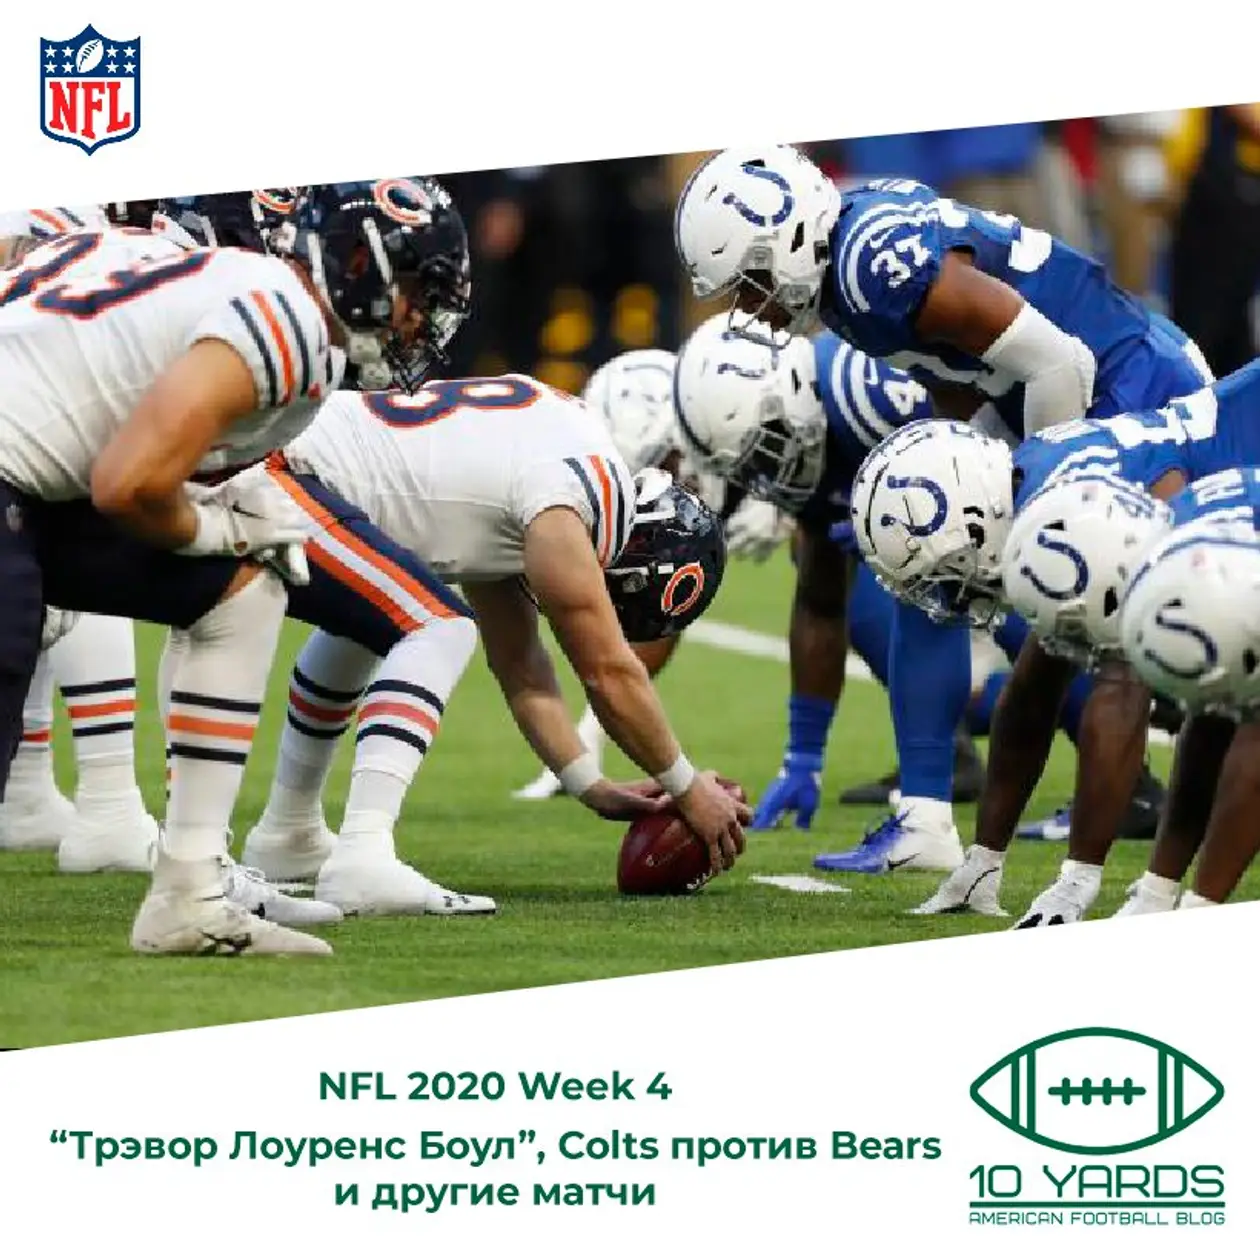 NFL 2020 Preview Week 4. “Трэвор Лоуренс Боул”, Colts против Bears и другие матчи